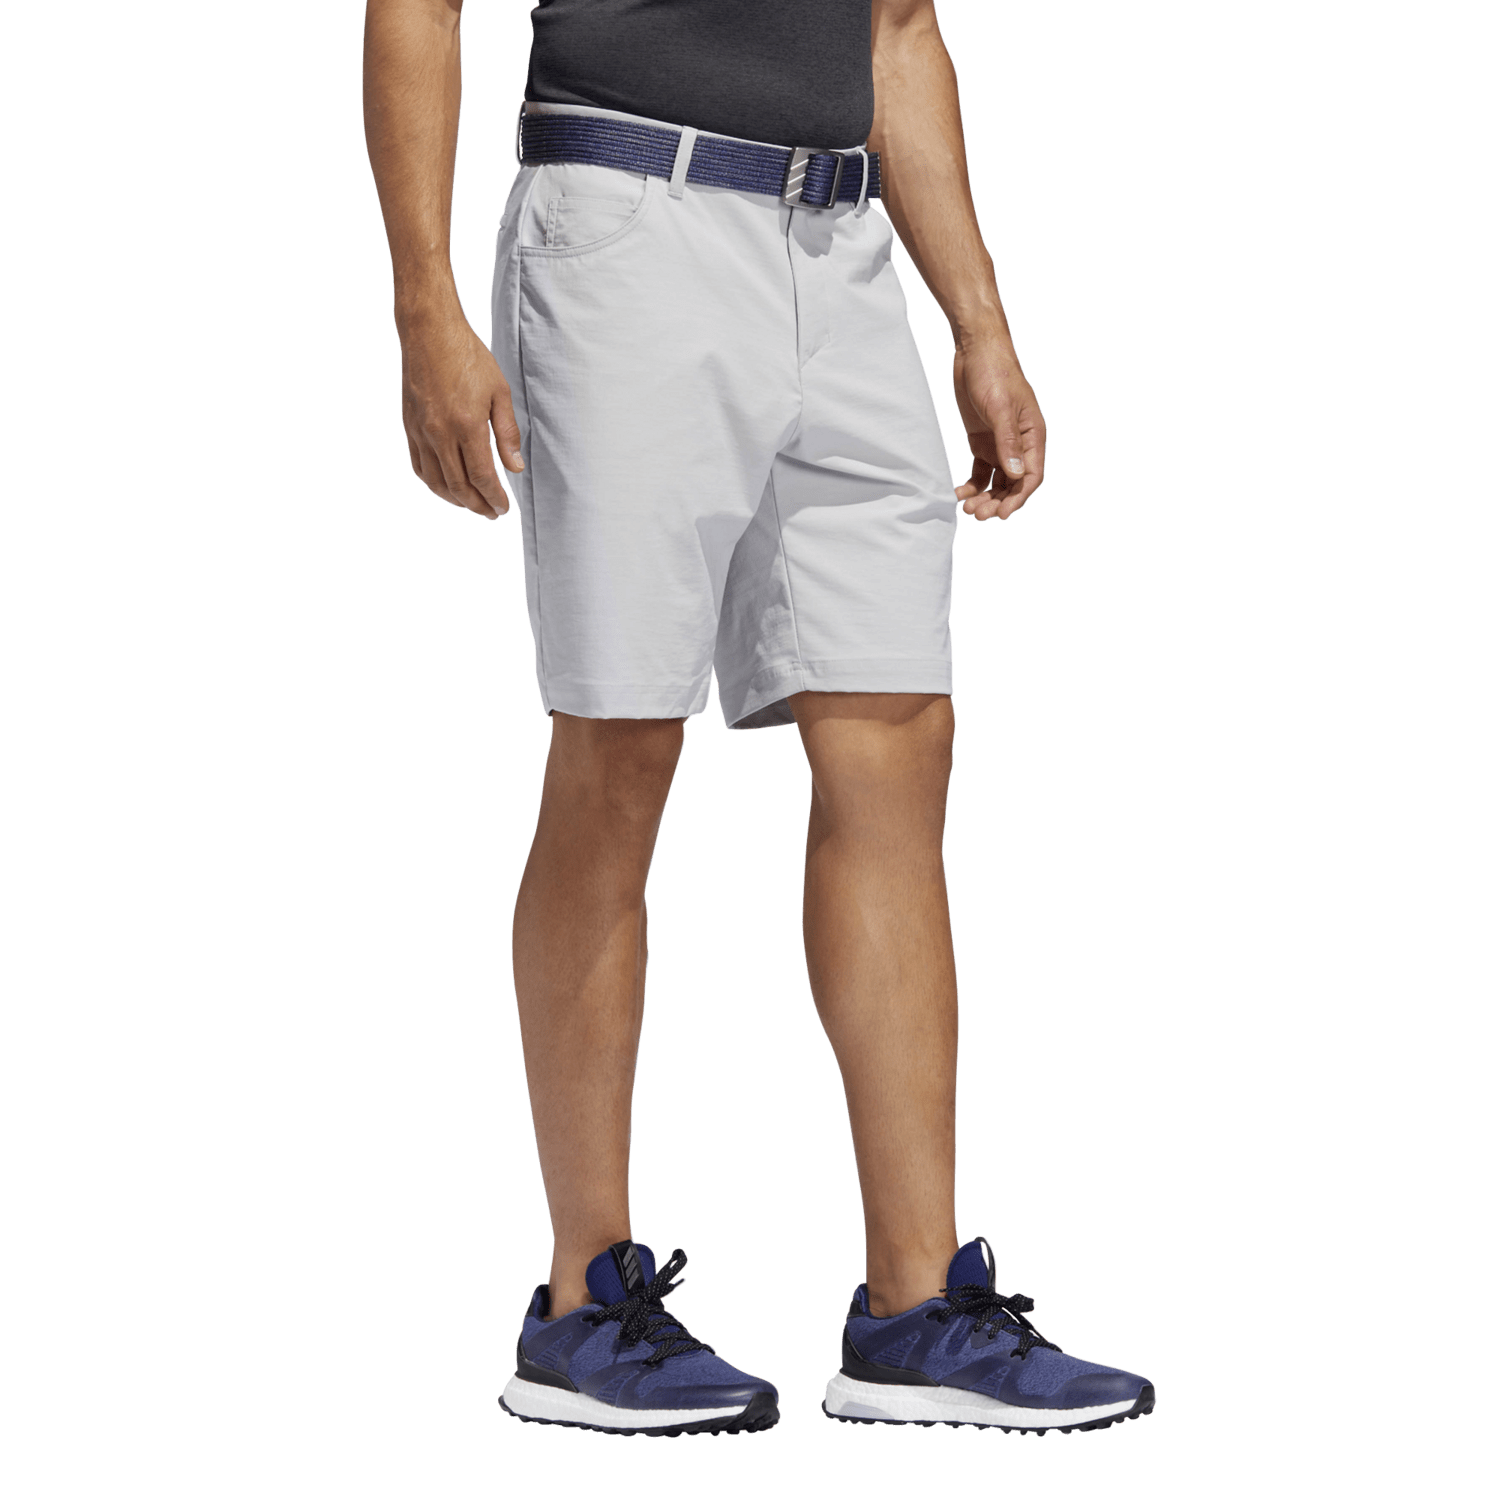 five pocket golf shorts